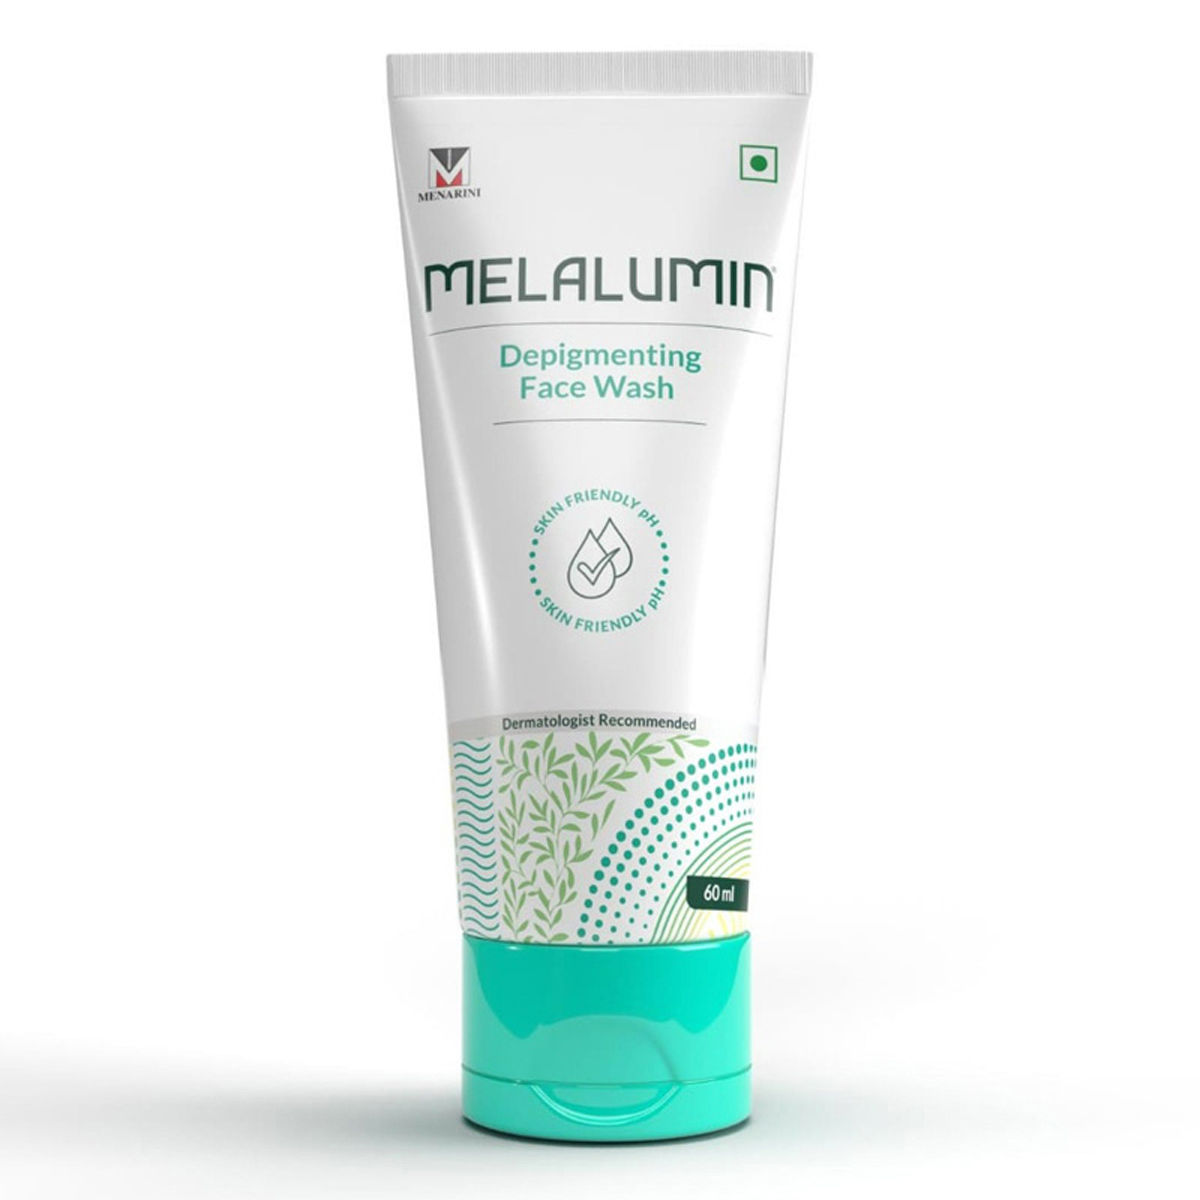 Buy Melalumin Depigmenting Face Wash 60 ml Online